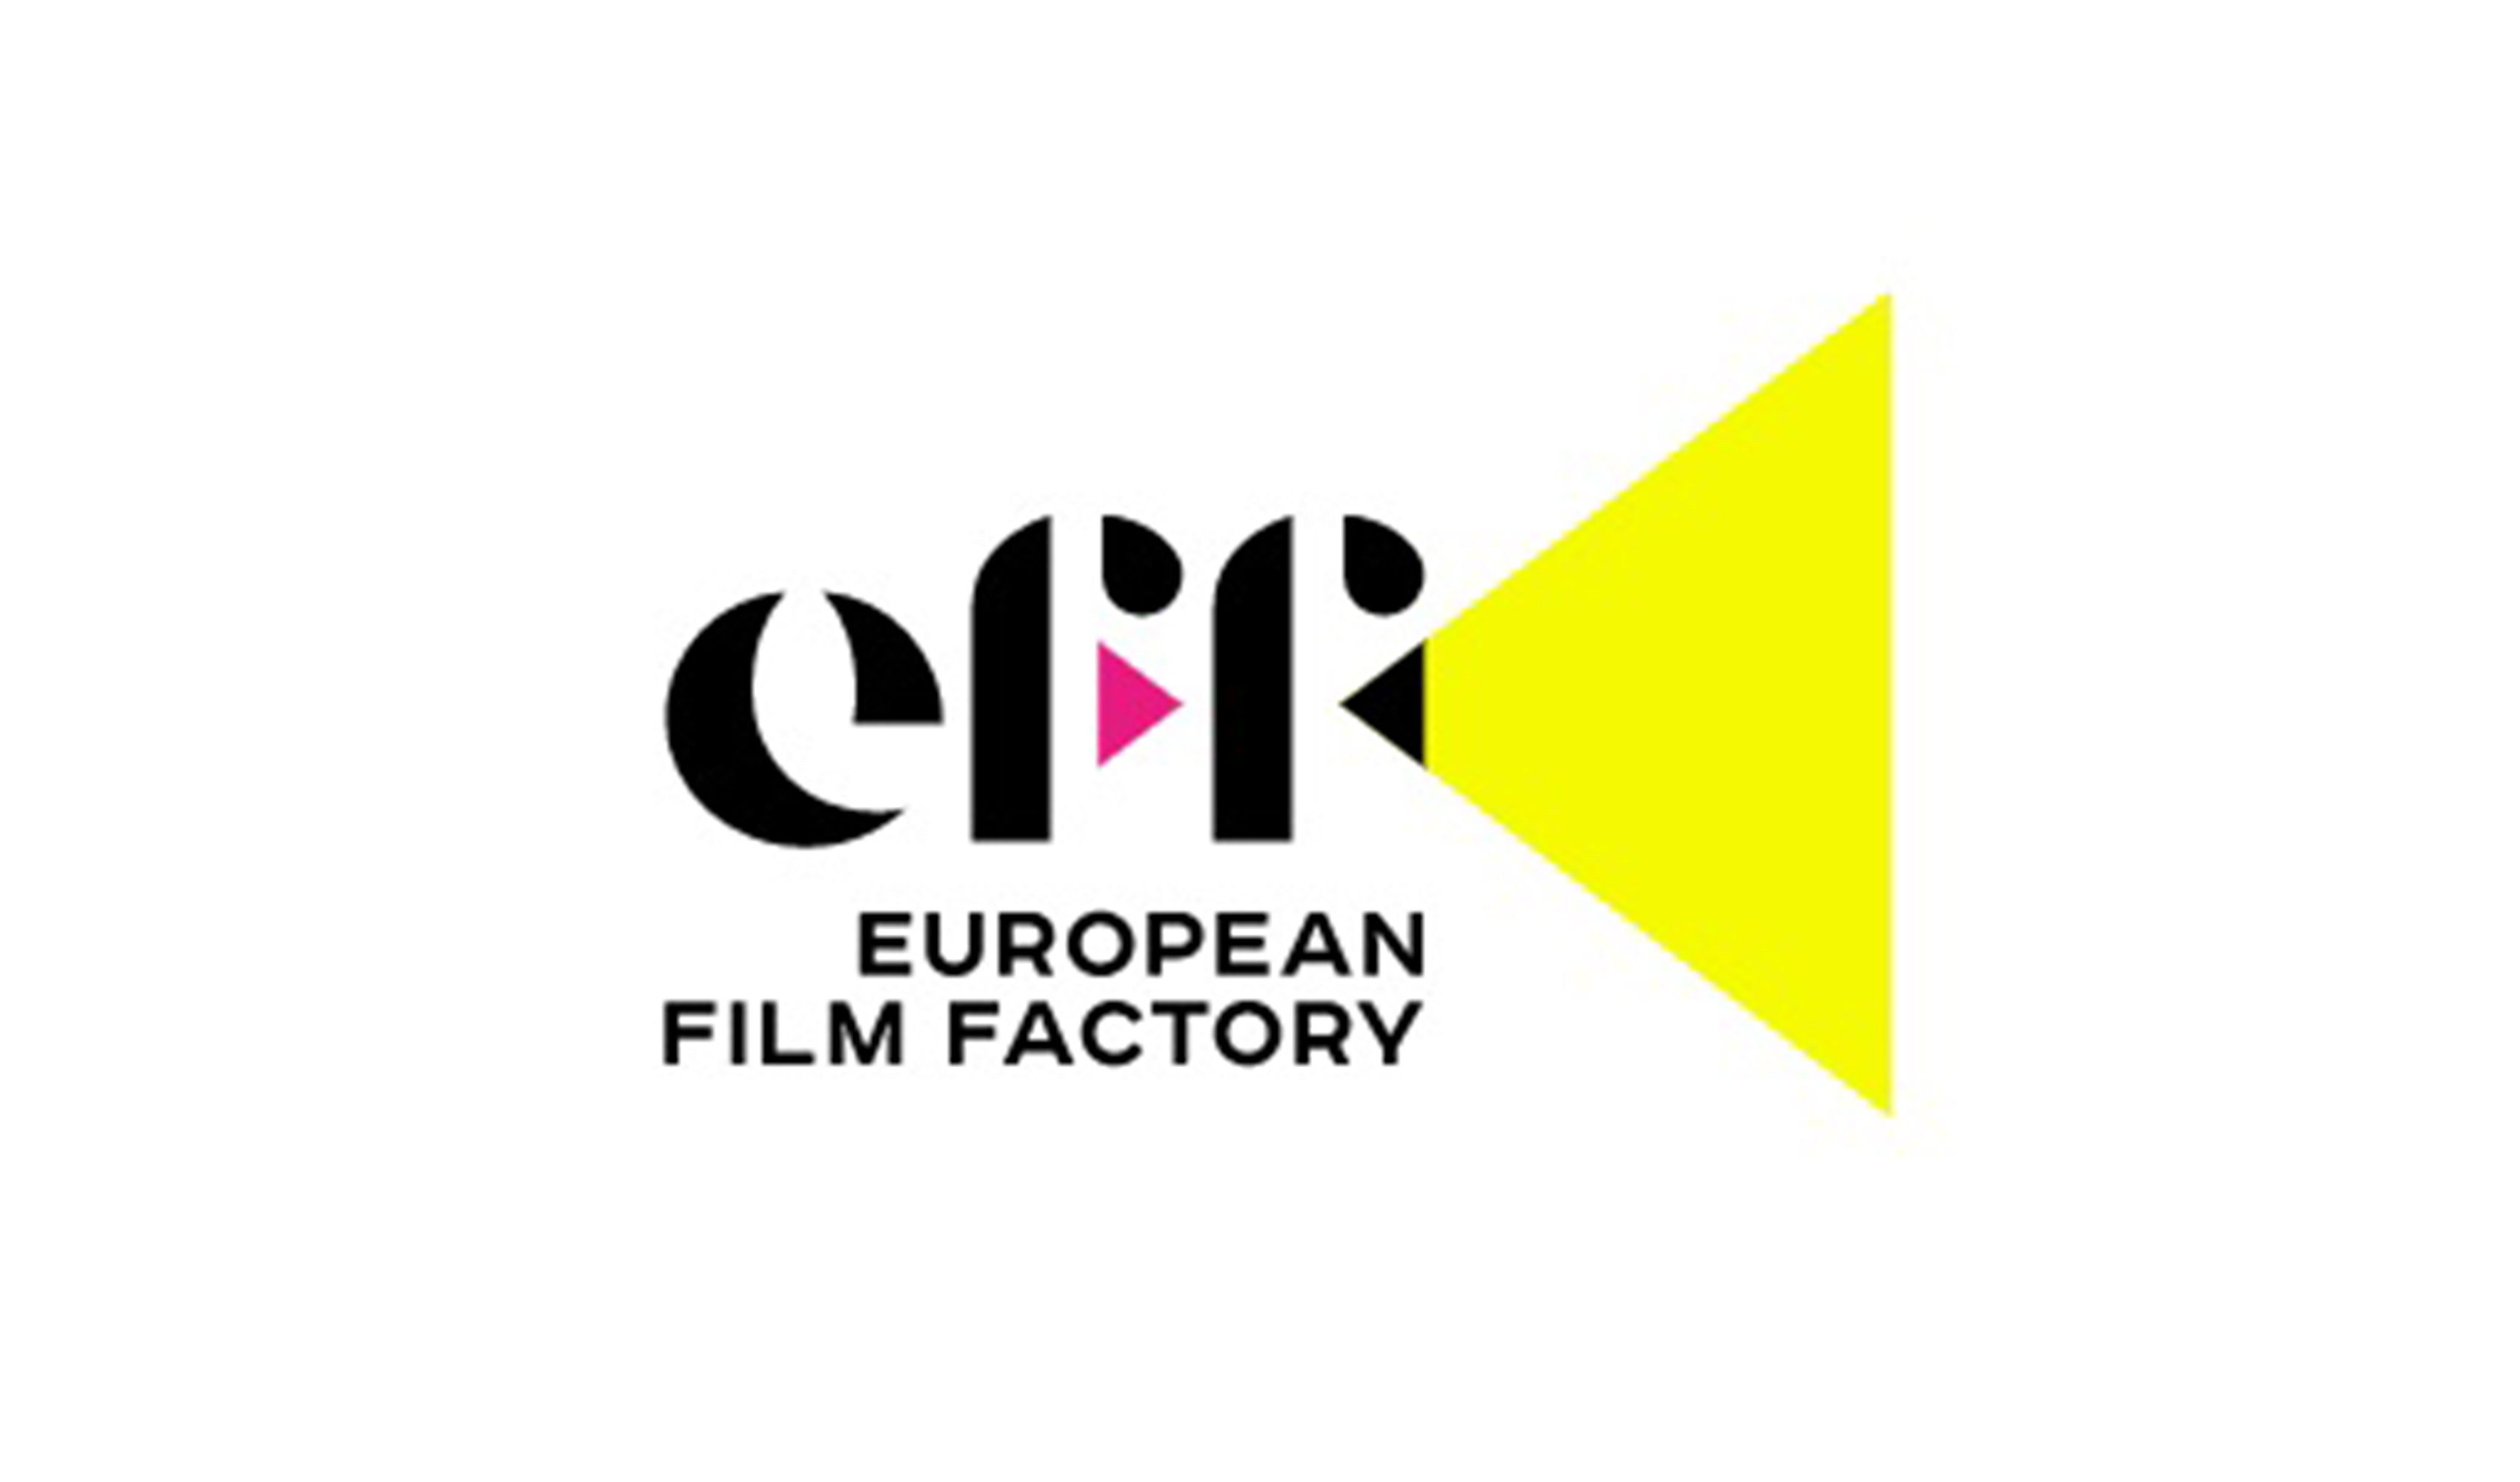 EUROPEAN FILM FACTORY